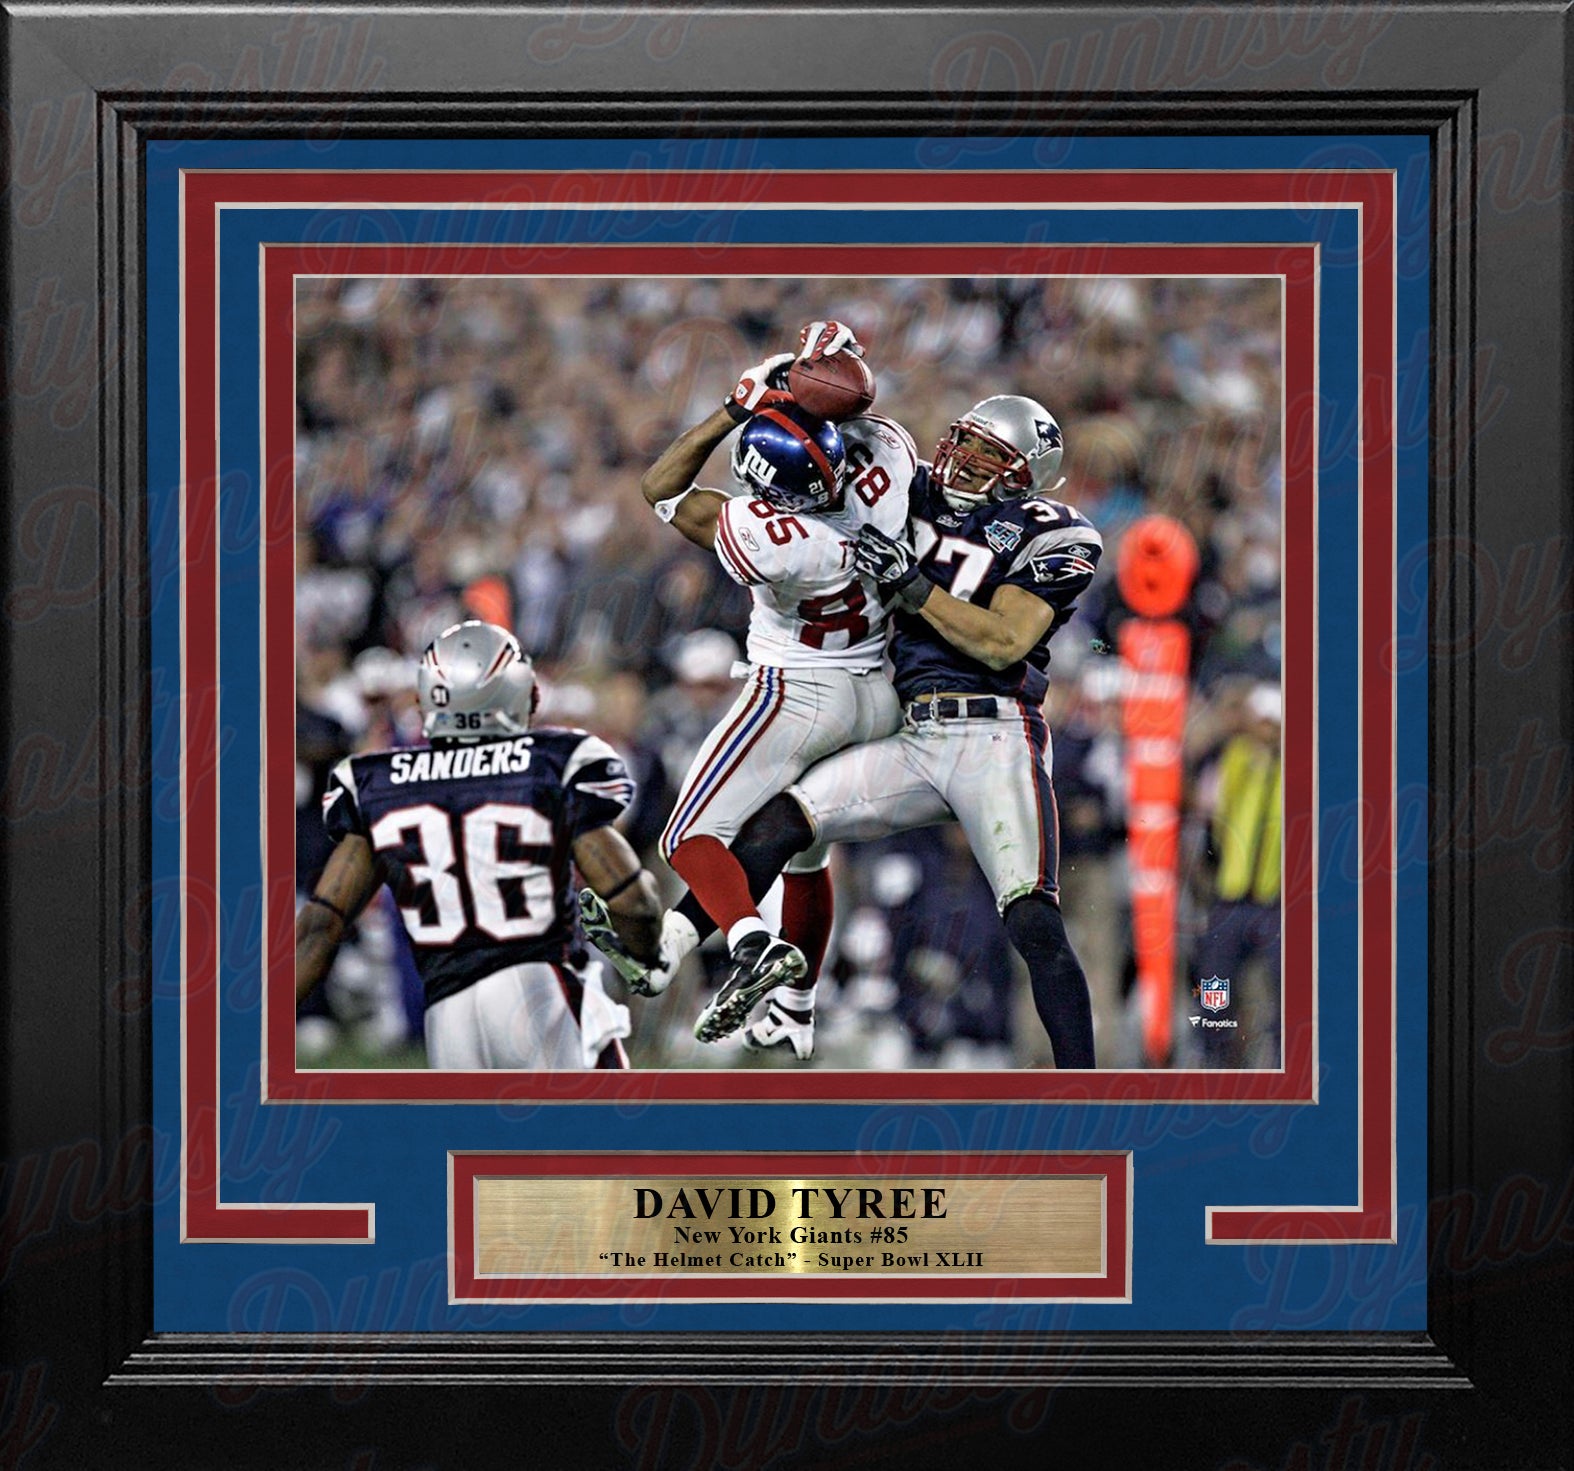 David Tyree Super Bowl XLII Helmet Catch New York Giants 8" x 10" Framed Football Photo - Dynasty Sports & Framing 